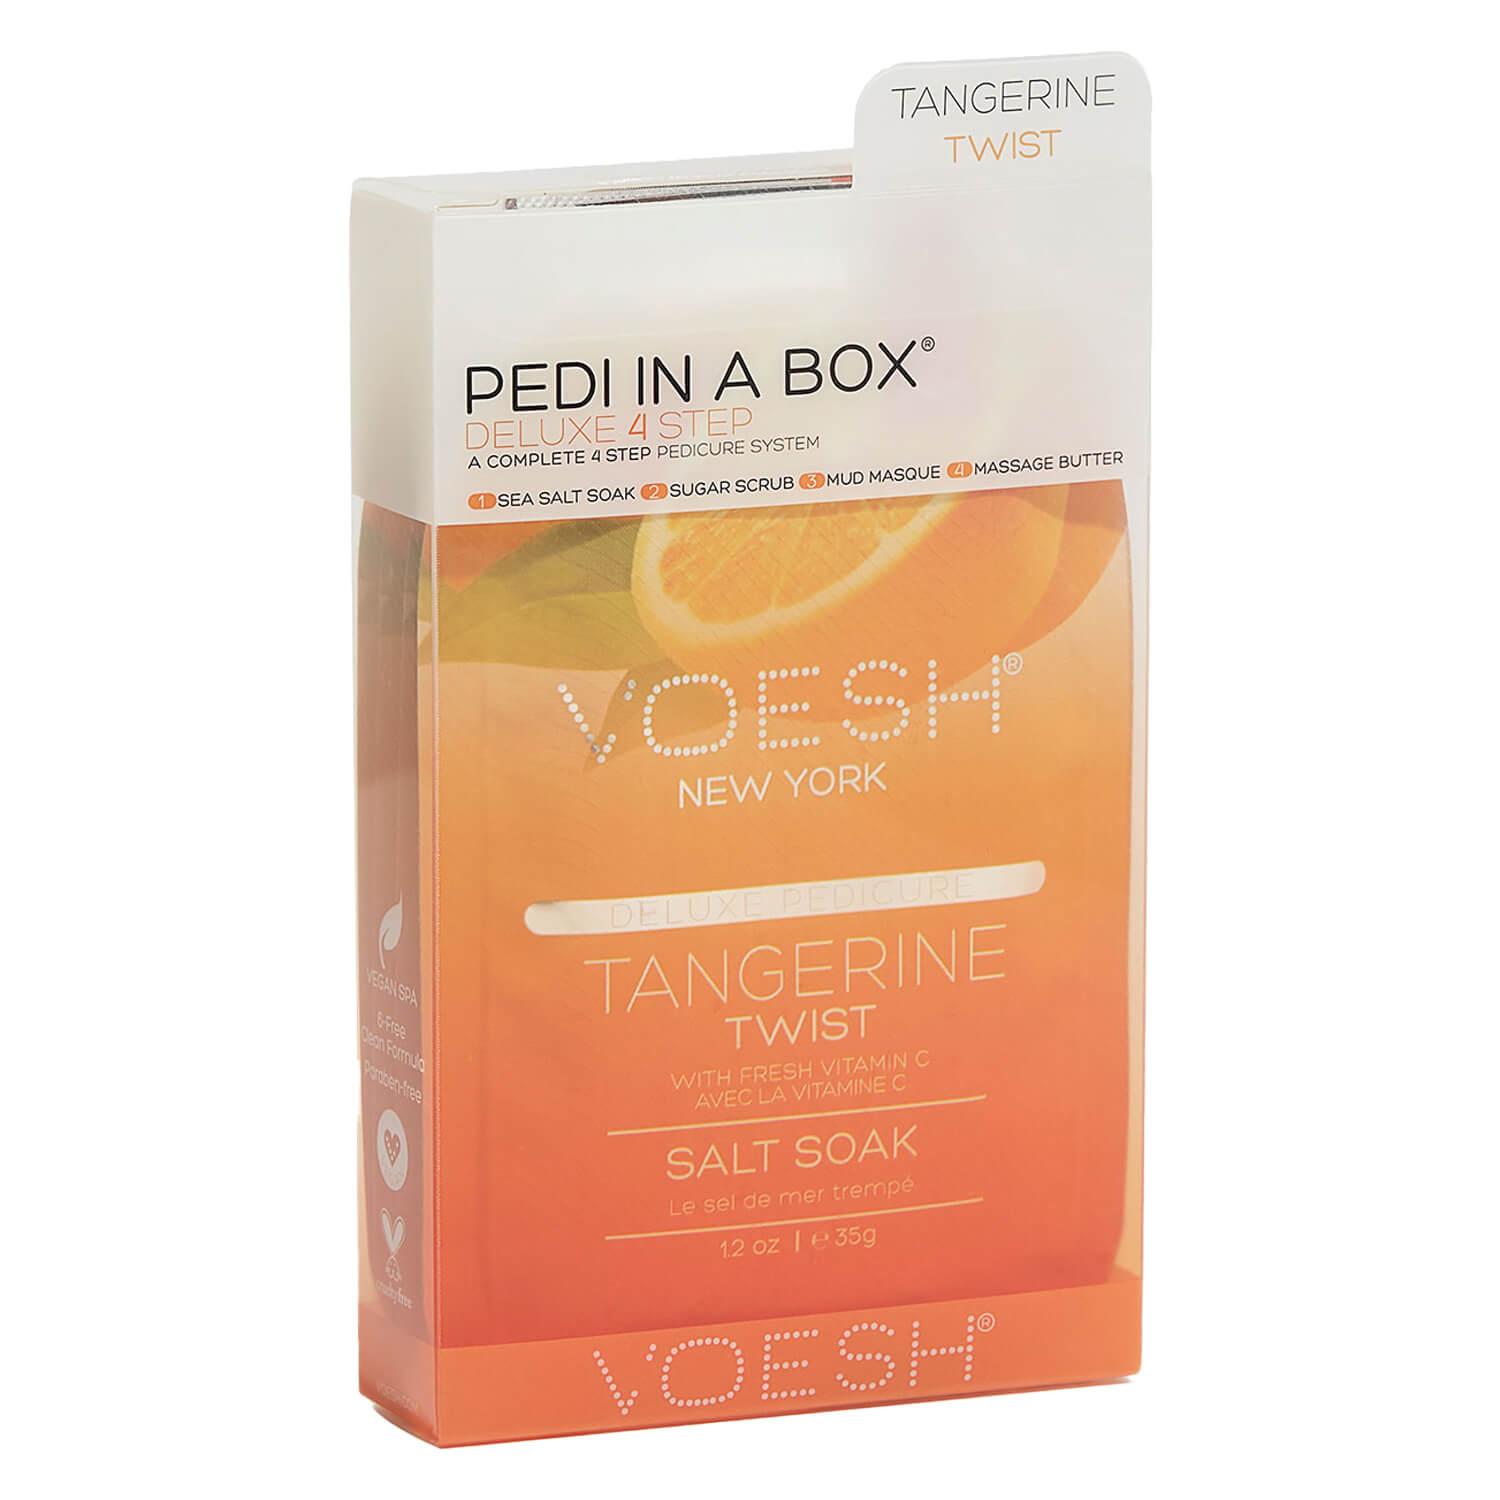 VOESH New York - Pedi In A Box 4 Step Tangerine Twist